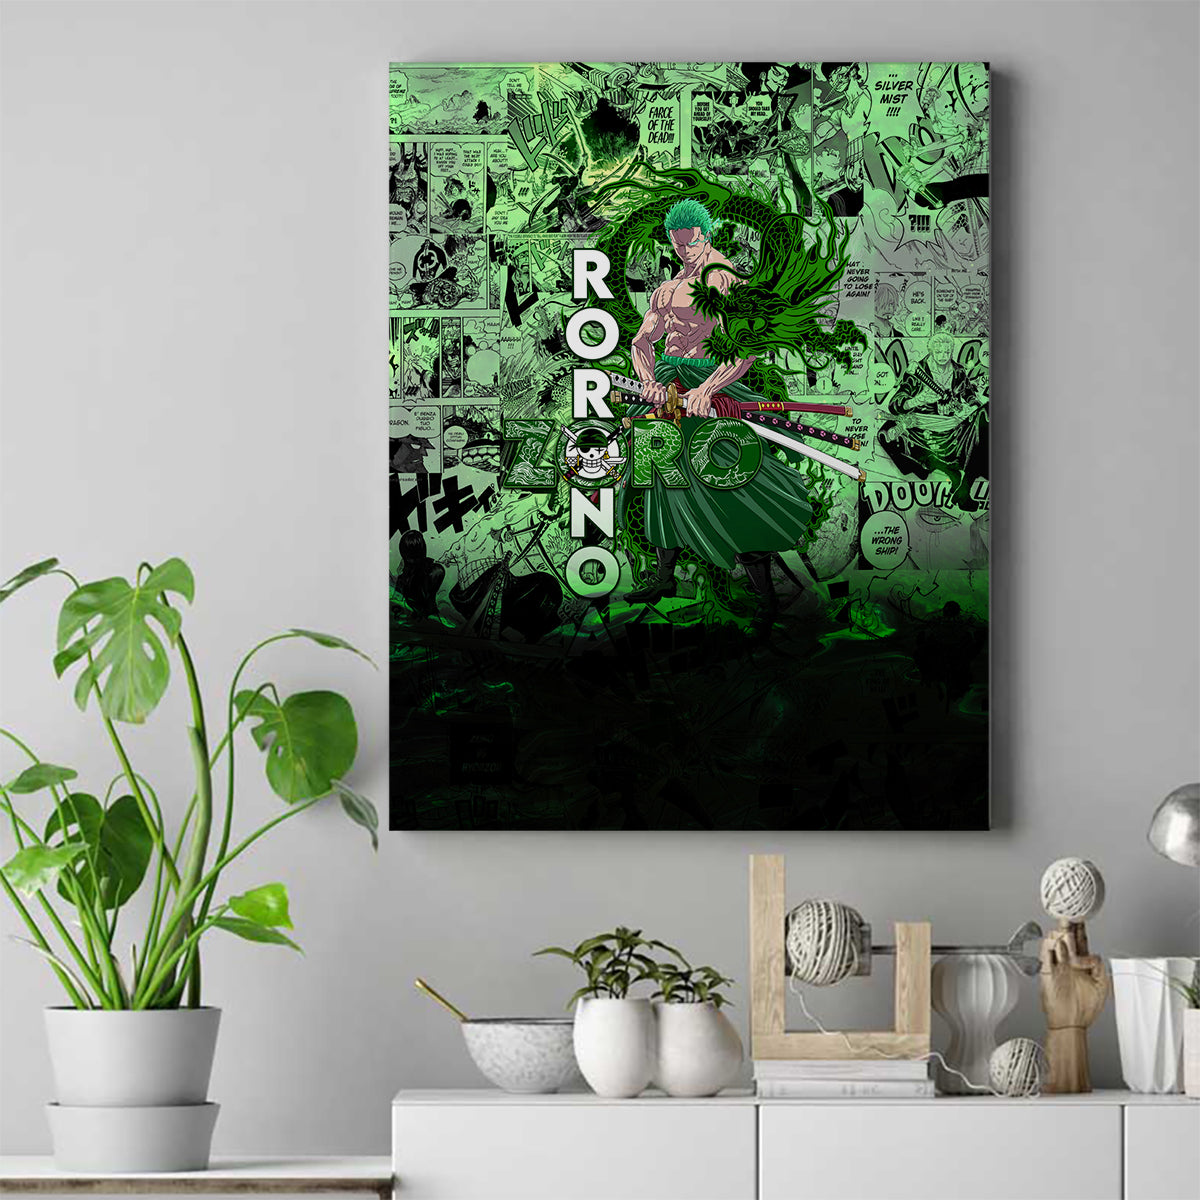 one-piece-roronoa-zoro-canvas-wall-art-dragon-twister-style